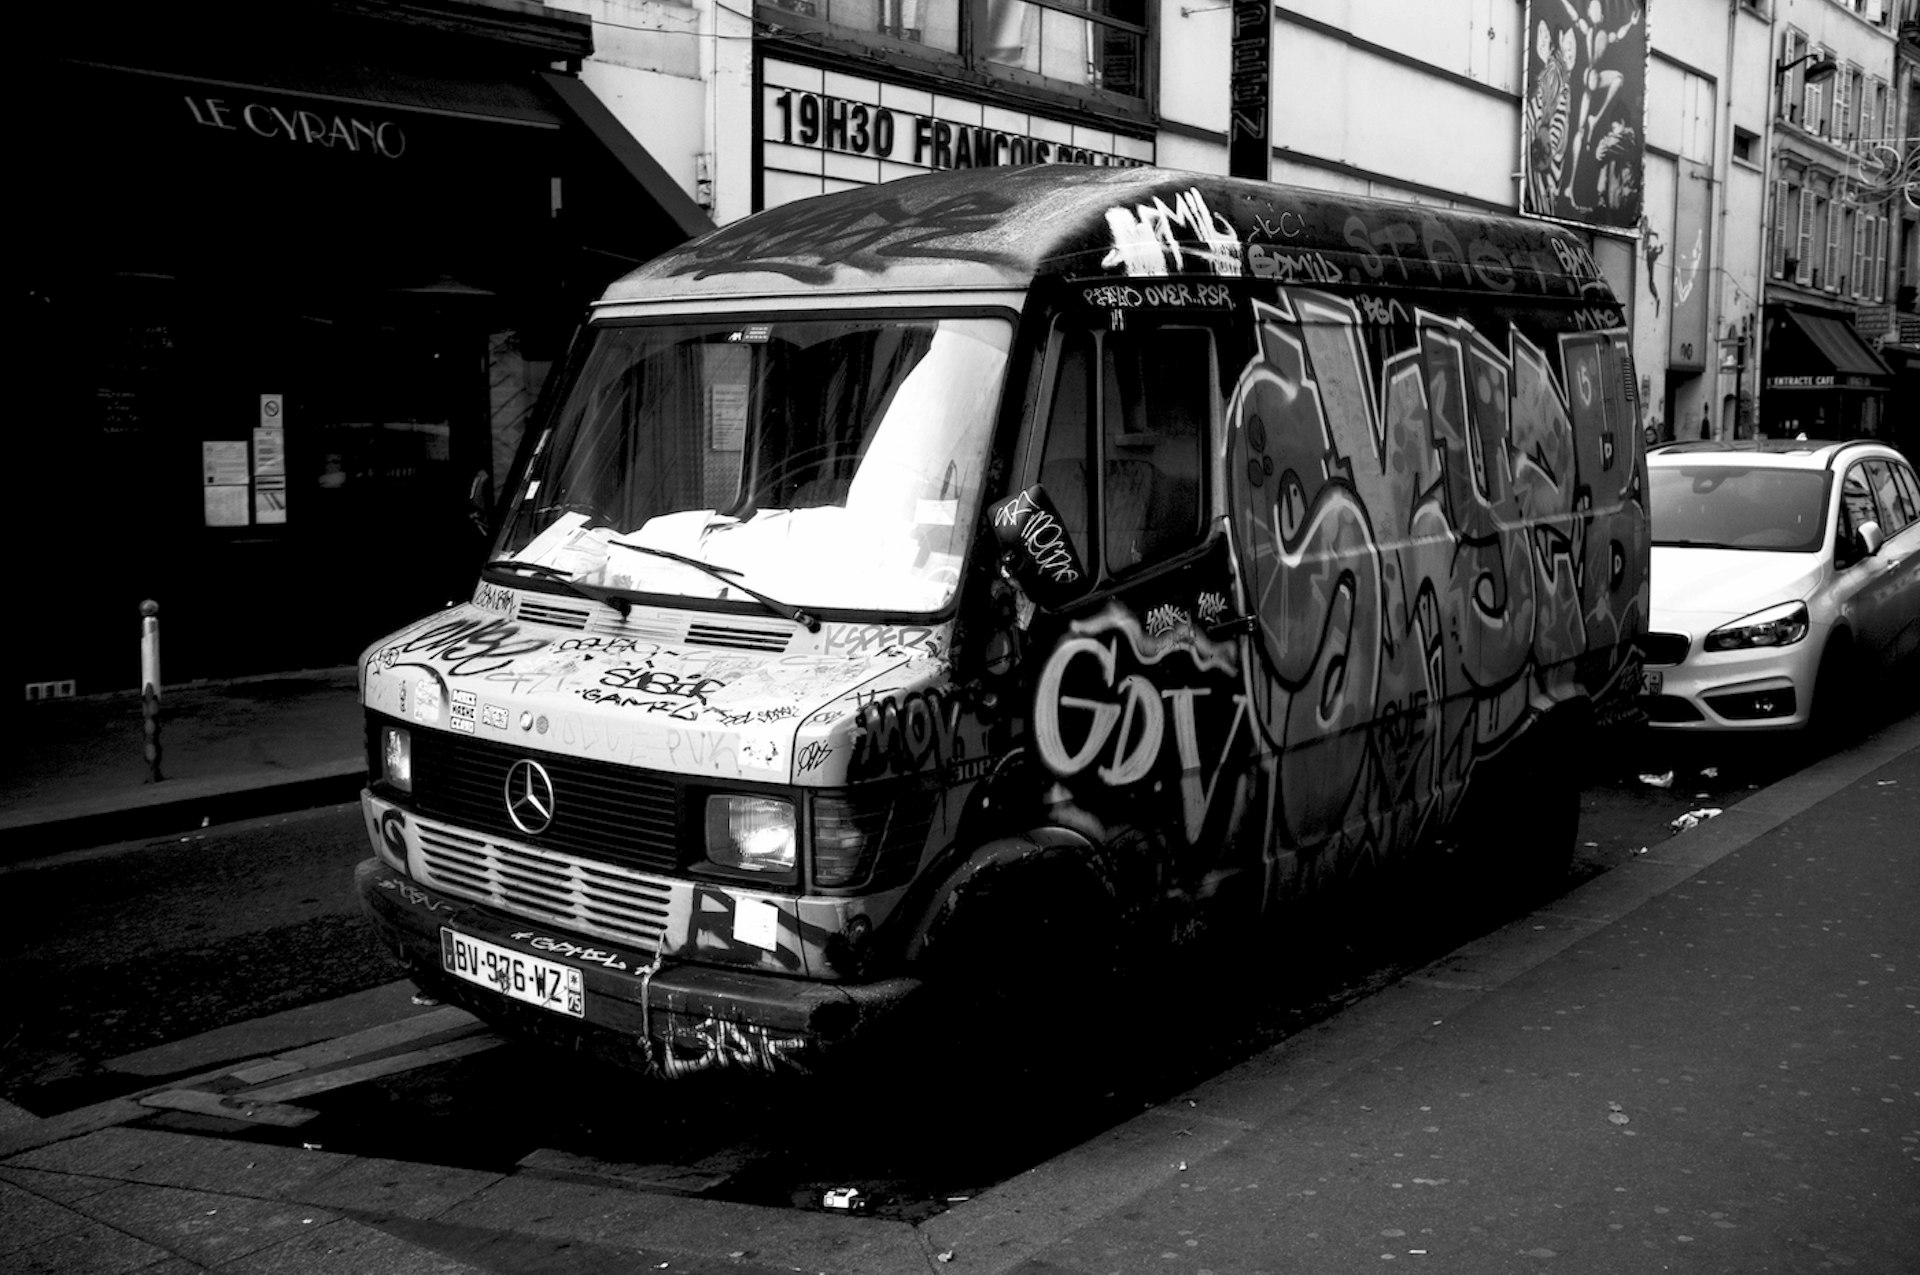 161127-marcvallee-Graffiti-Trucks-27.11.16.0016